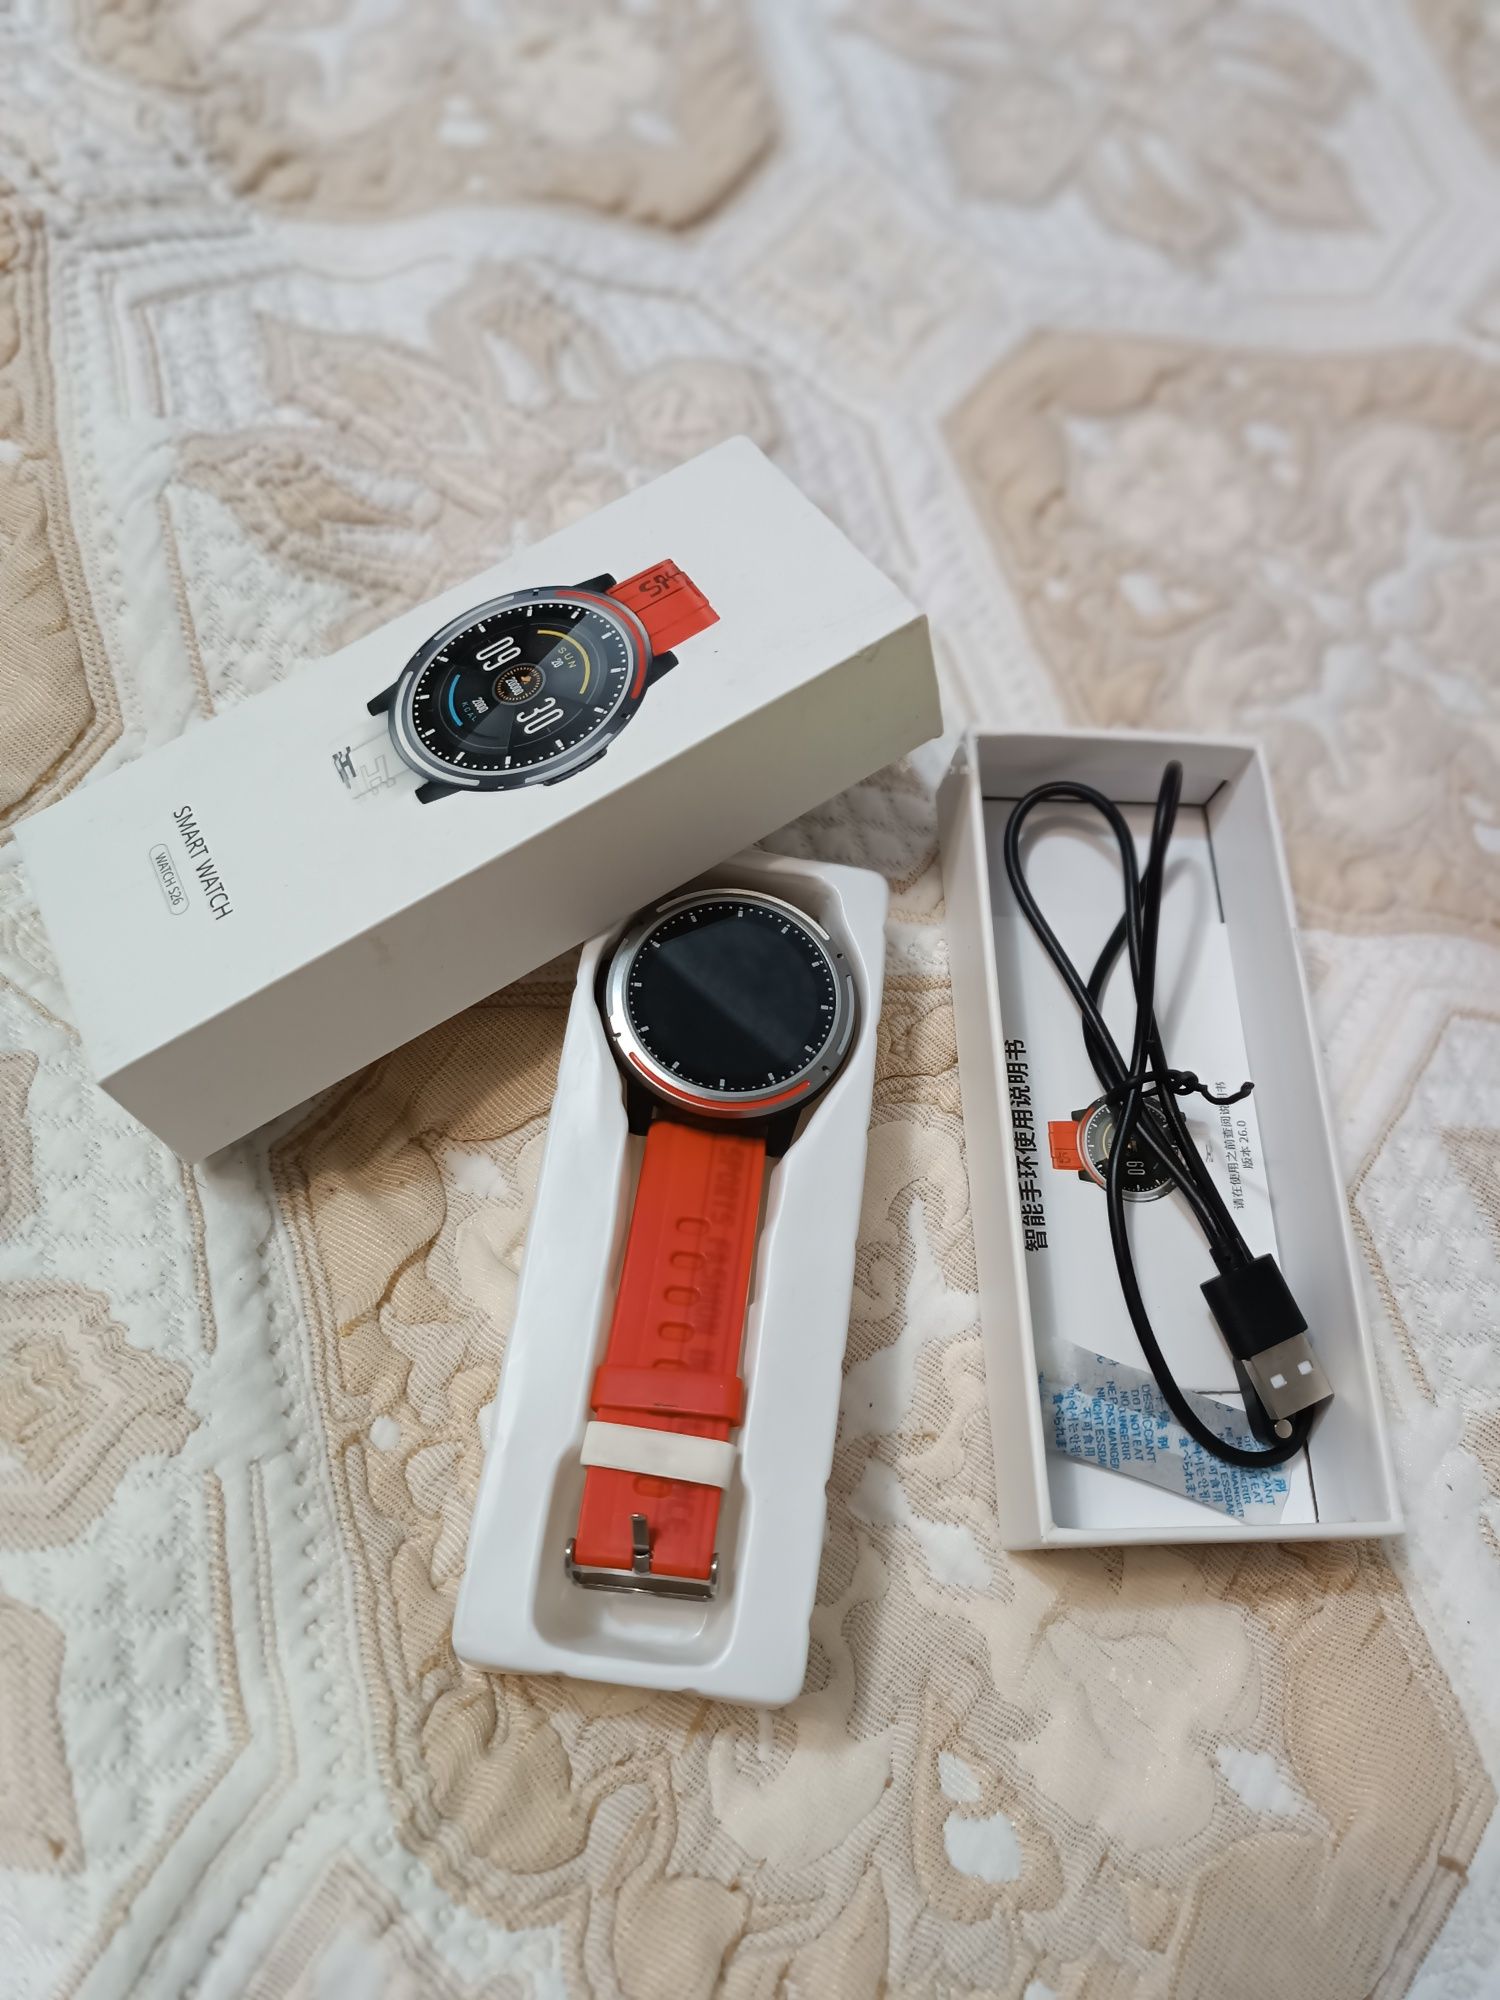 Смарт-часы Smart Watch Sport S26